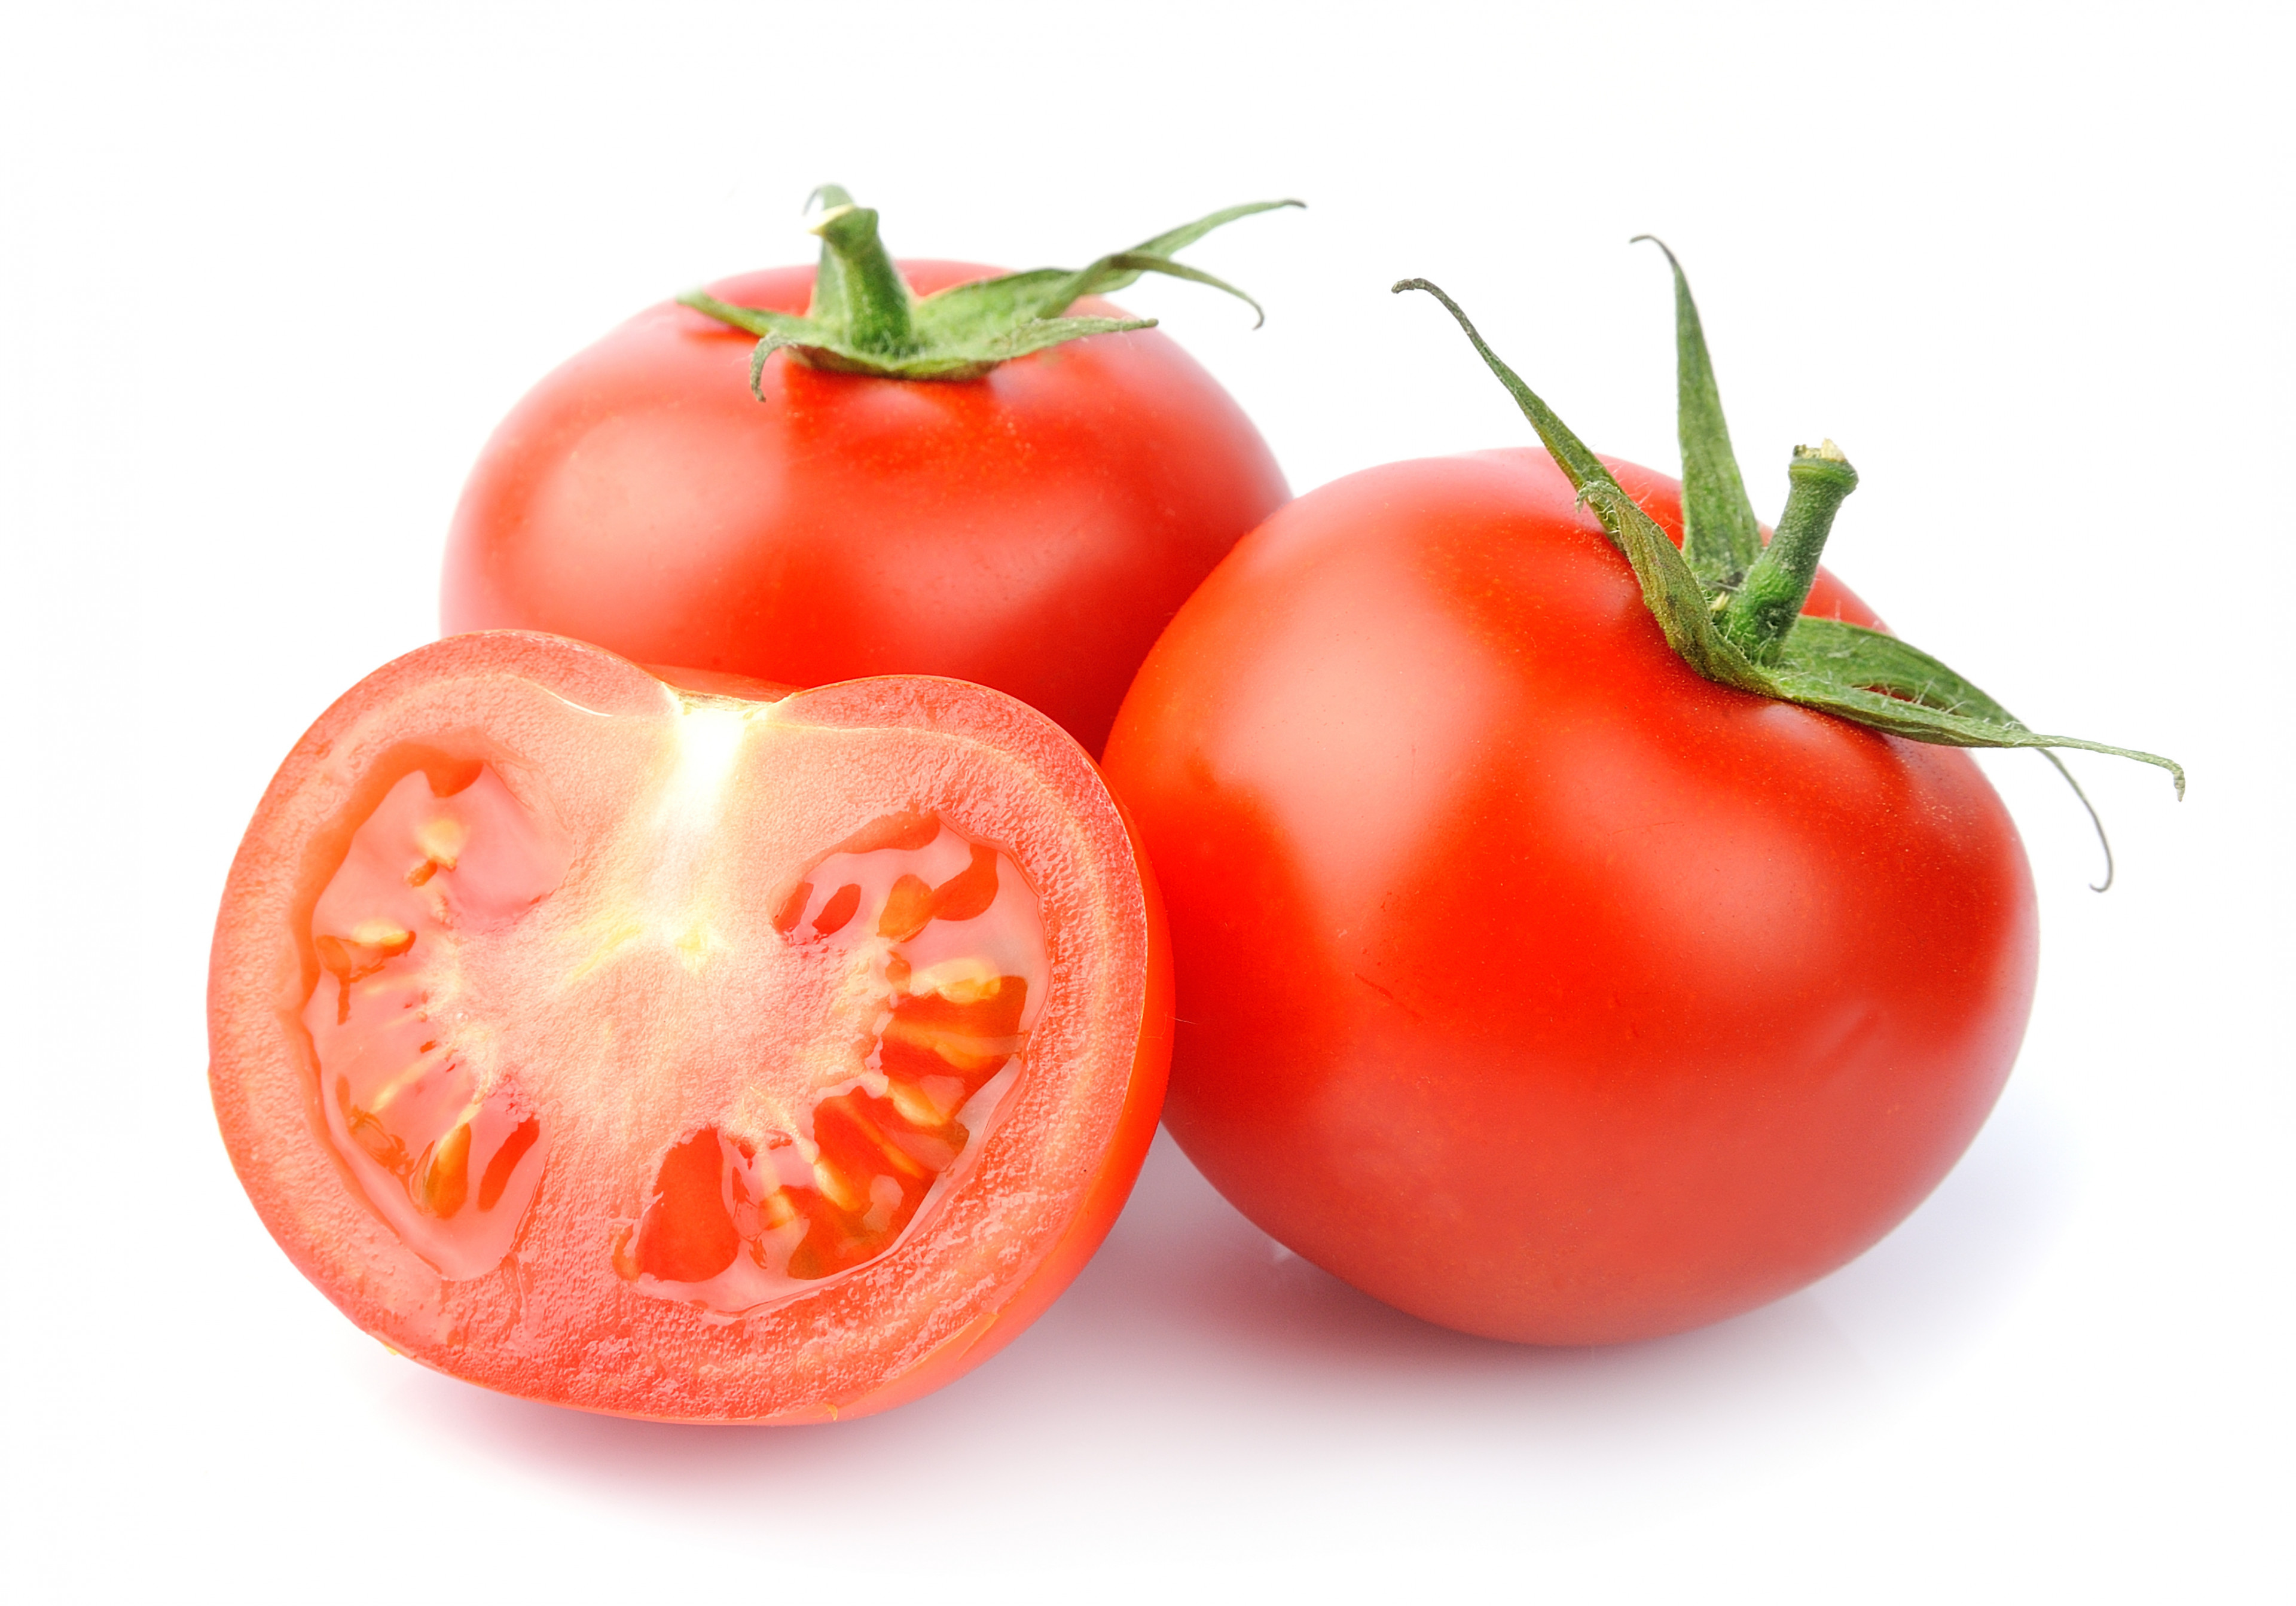 La Tomate en grappe